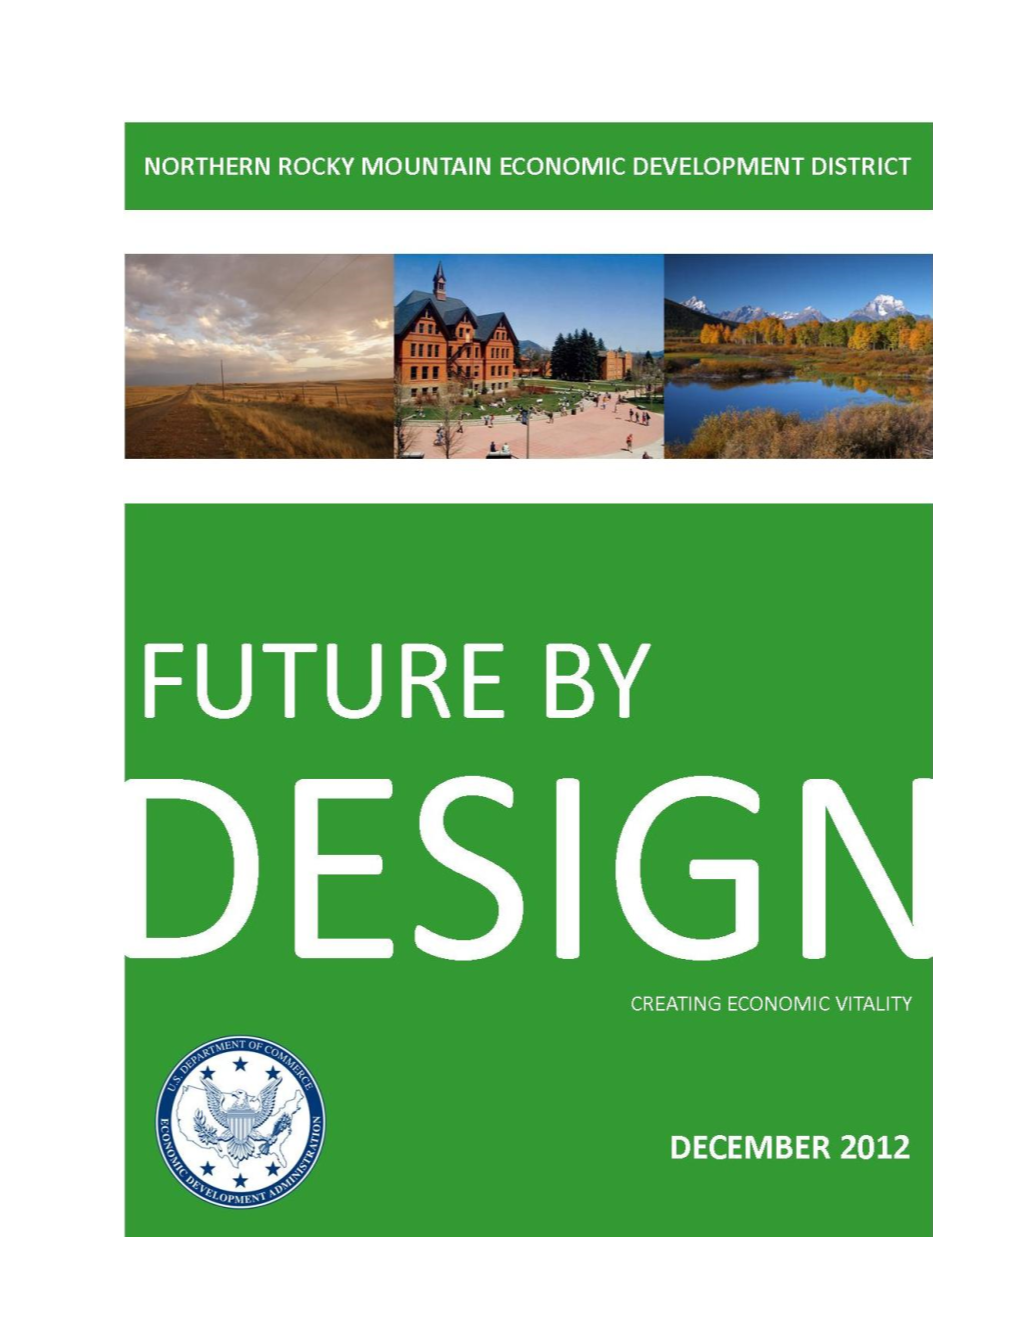 Northern Rocky Mountain Economic Development District